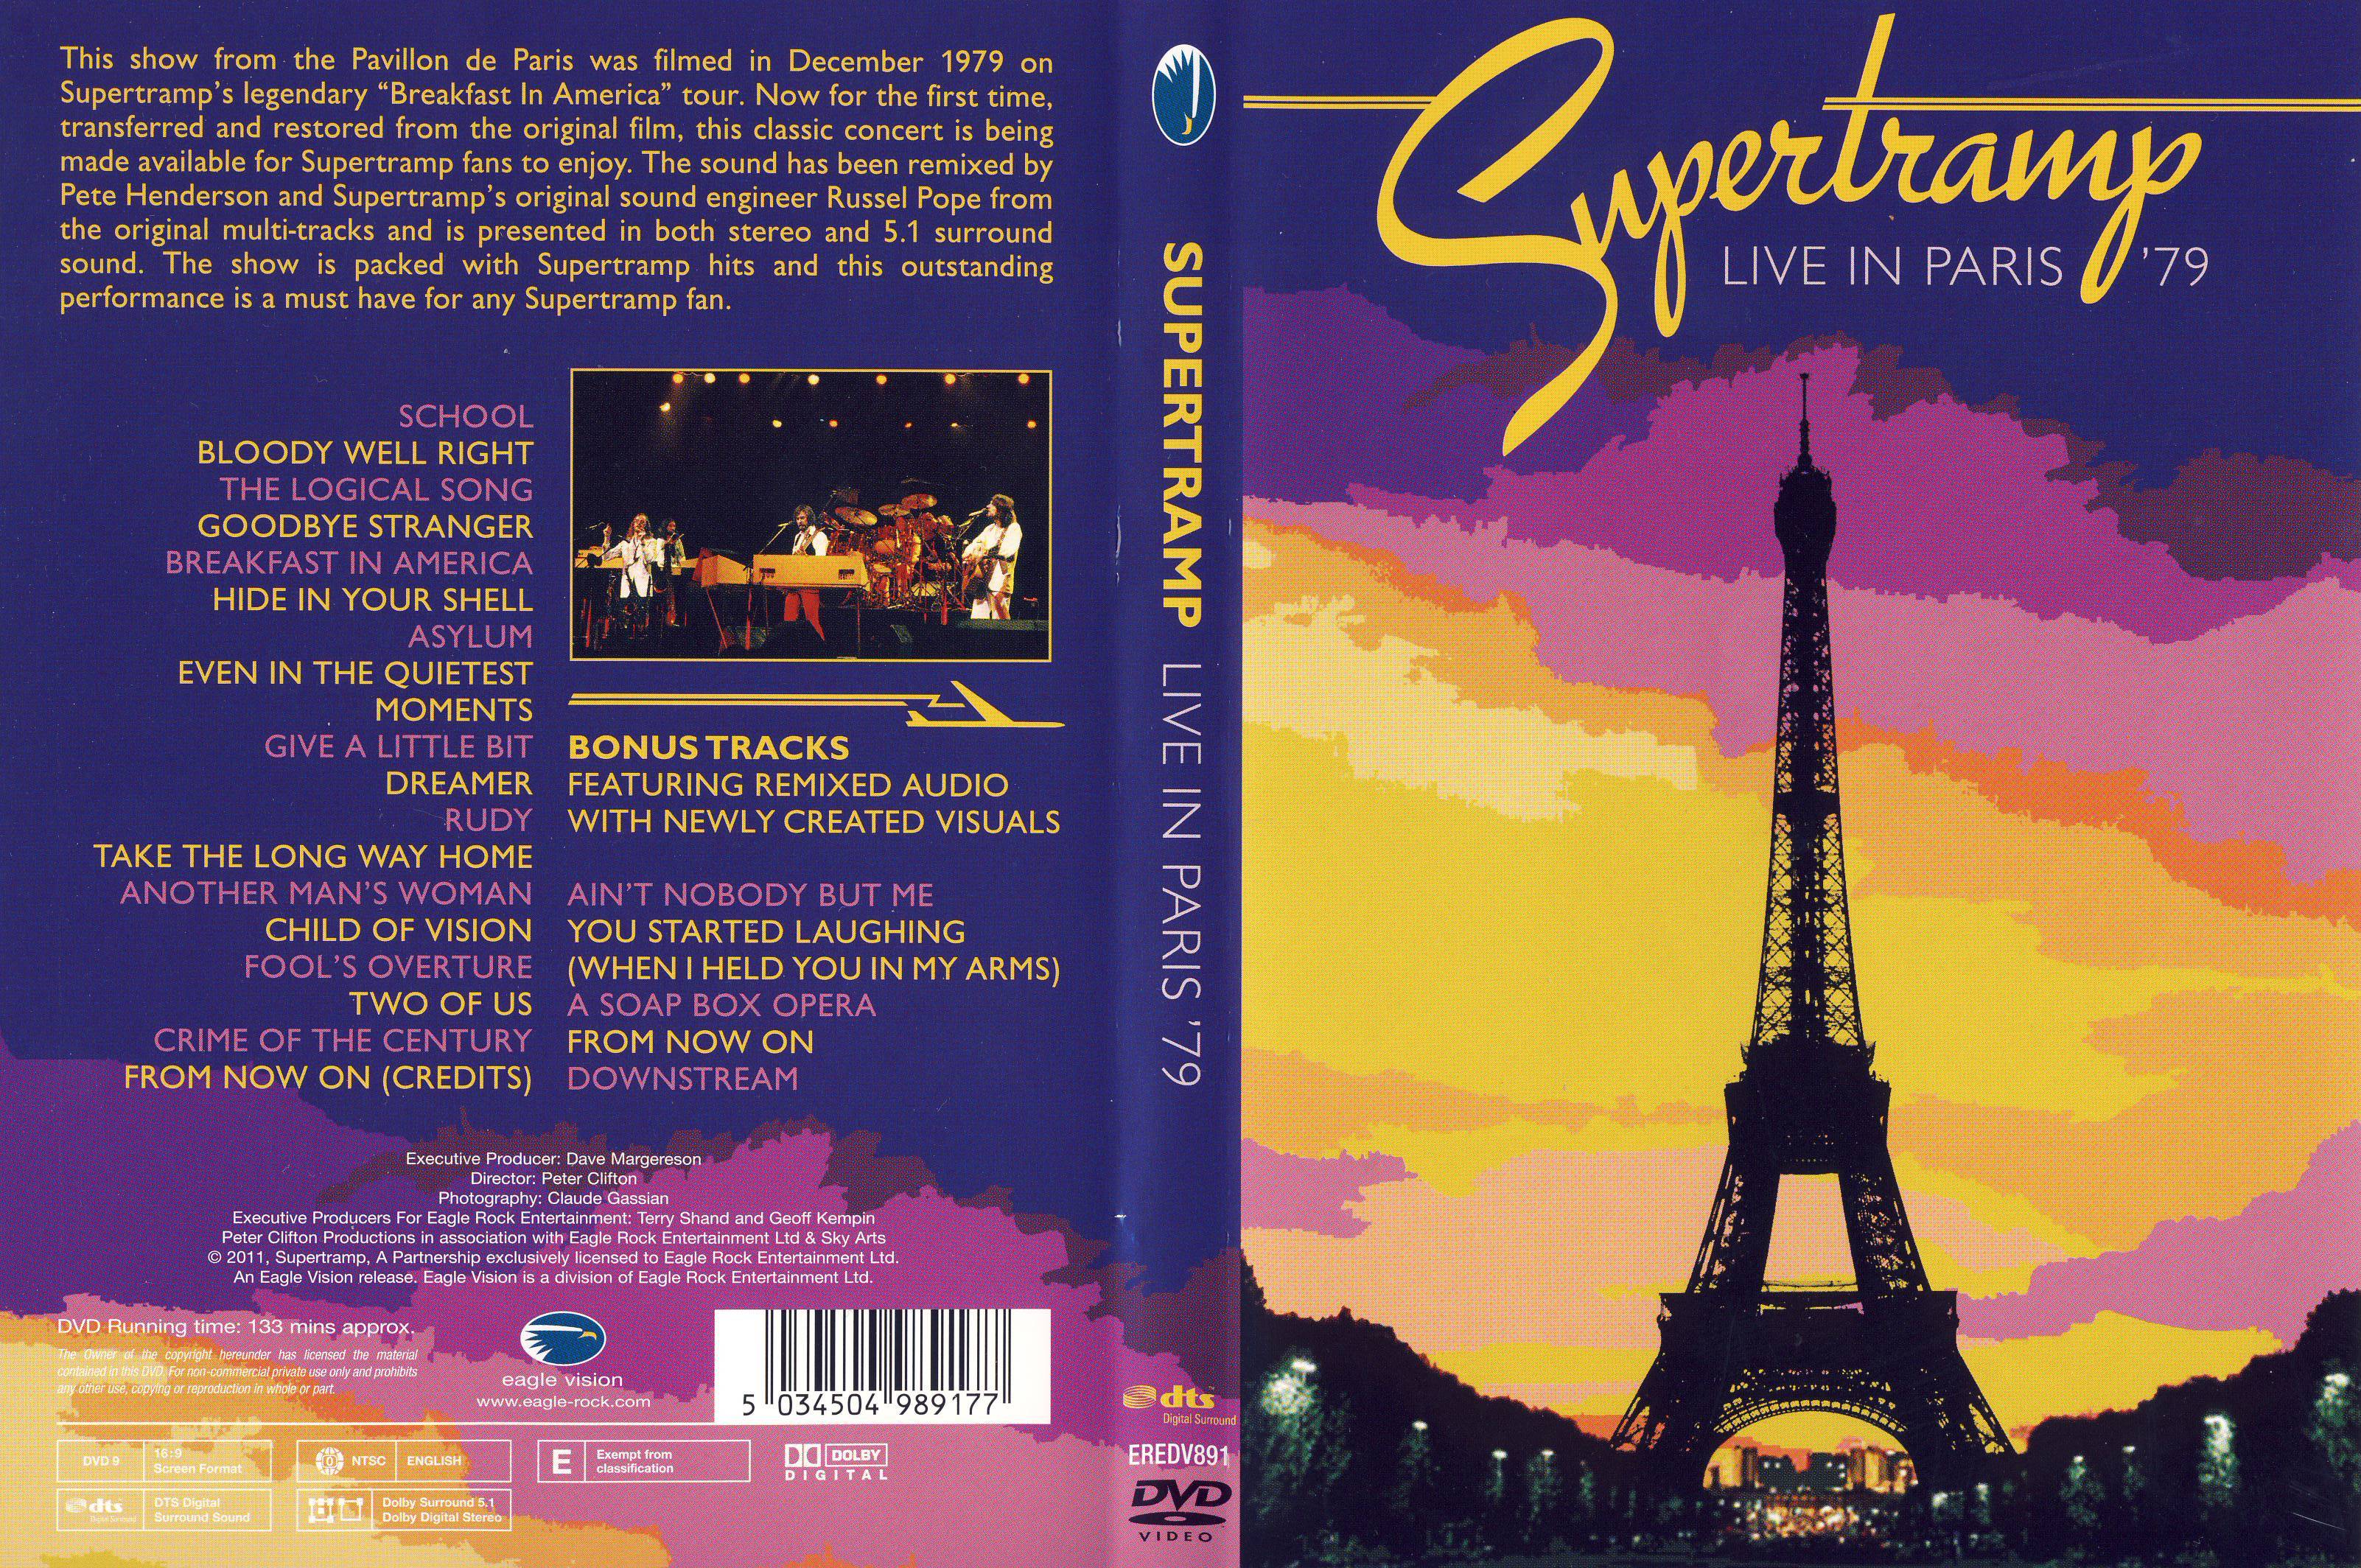 Jaquette DVD Supertramp - Live in Paris 79